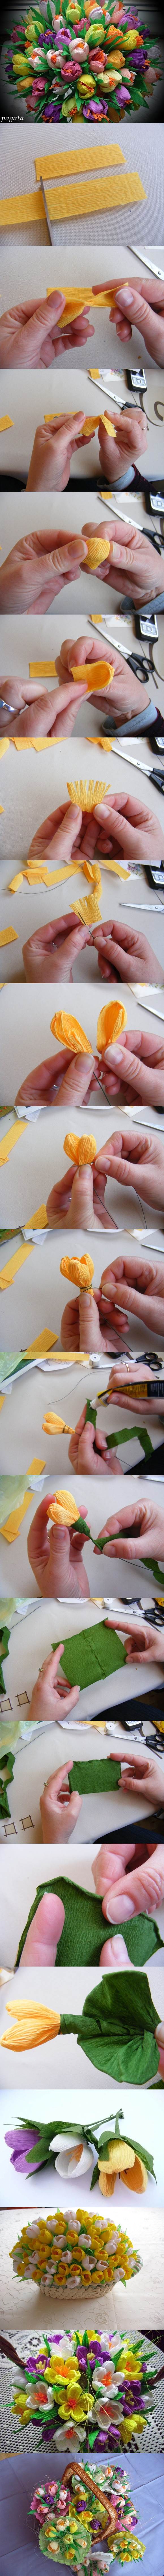 DIY Beautiful Bouquet of Crepe Paper Crocuses